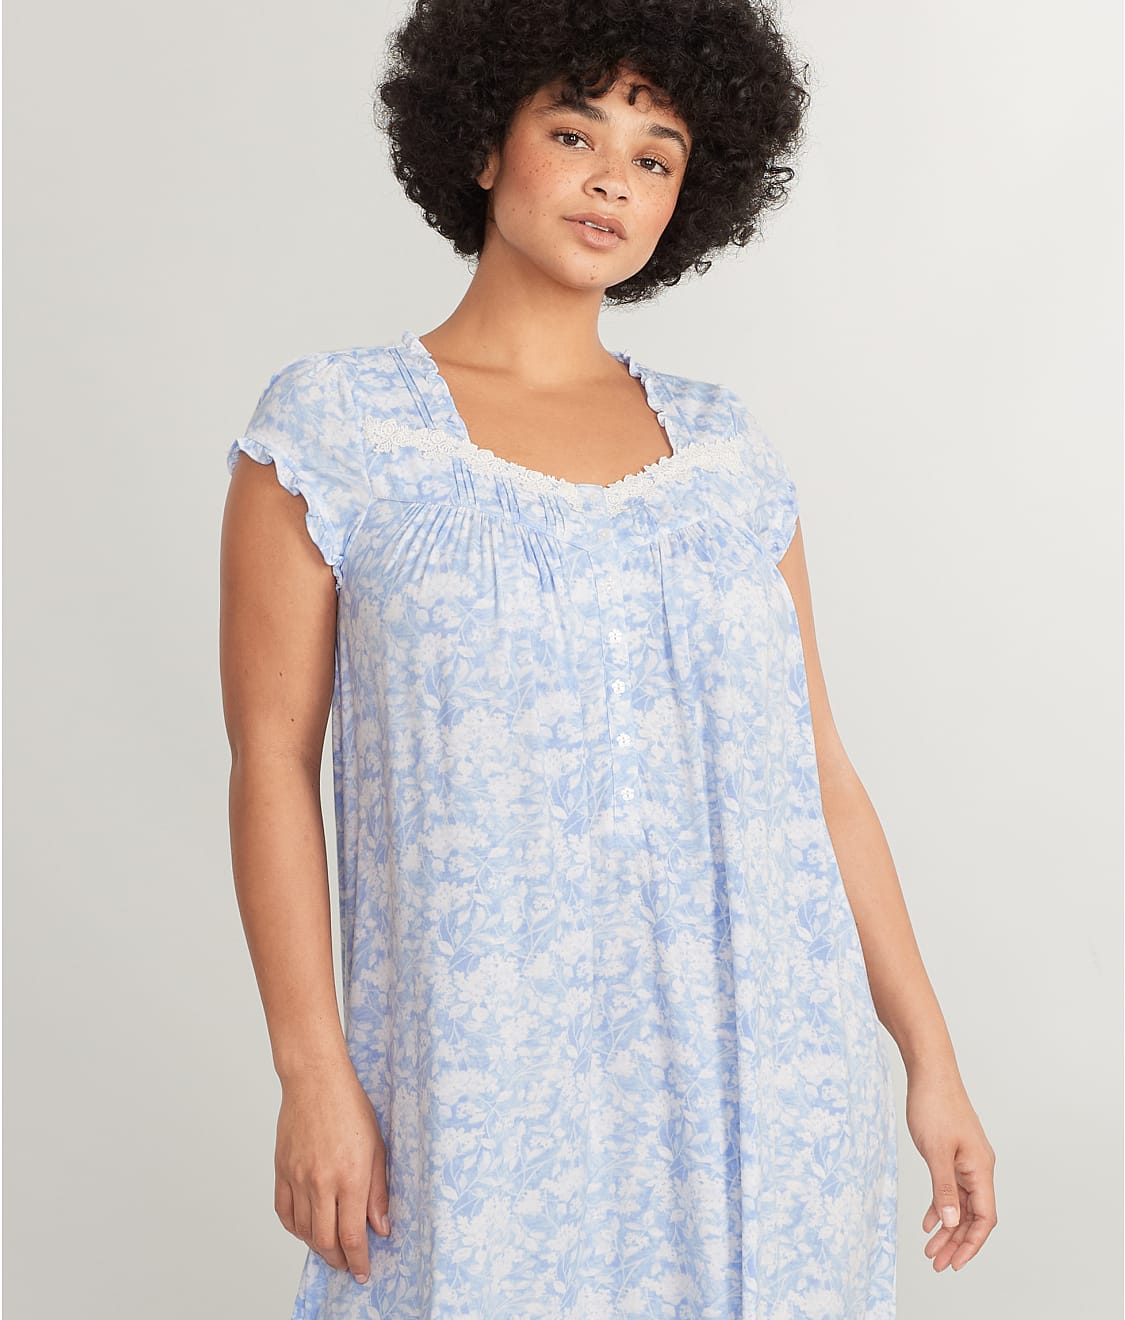 Eileen West Printed Cotton Jersey Pajama Set